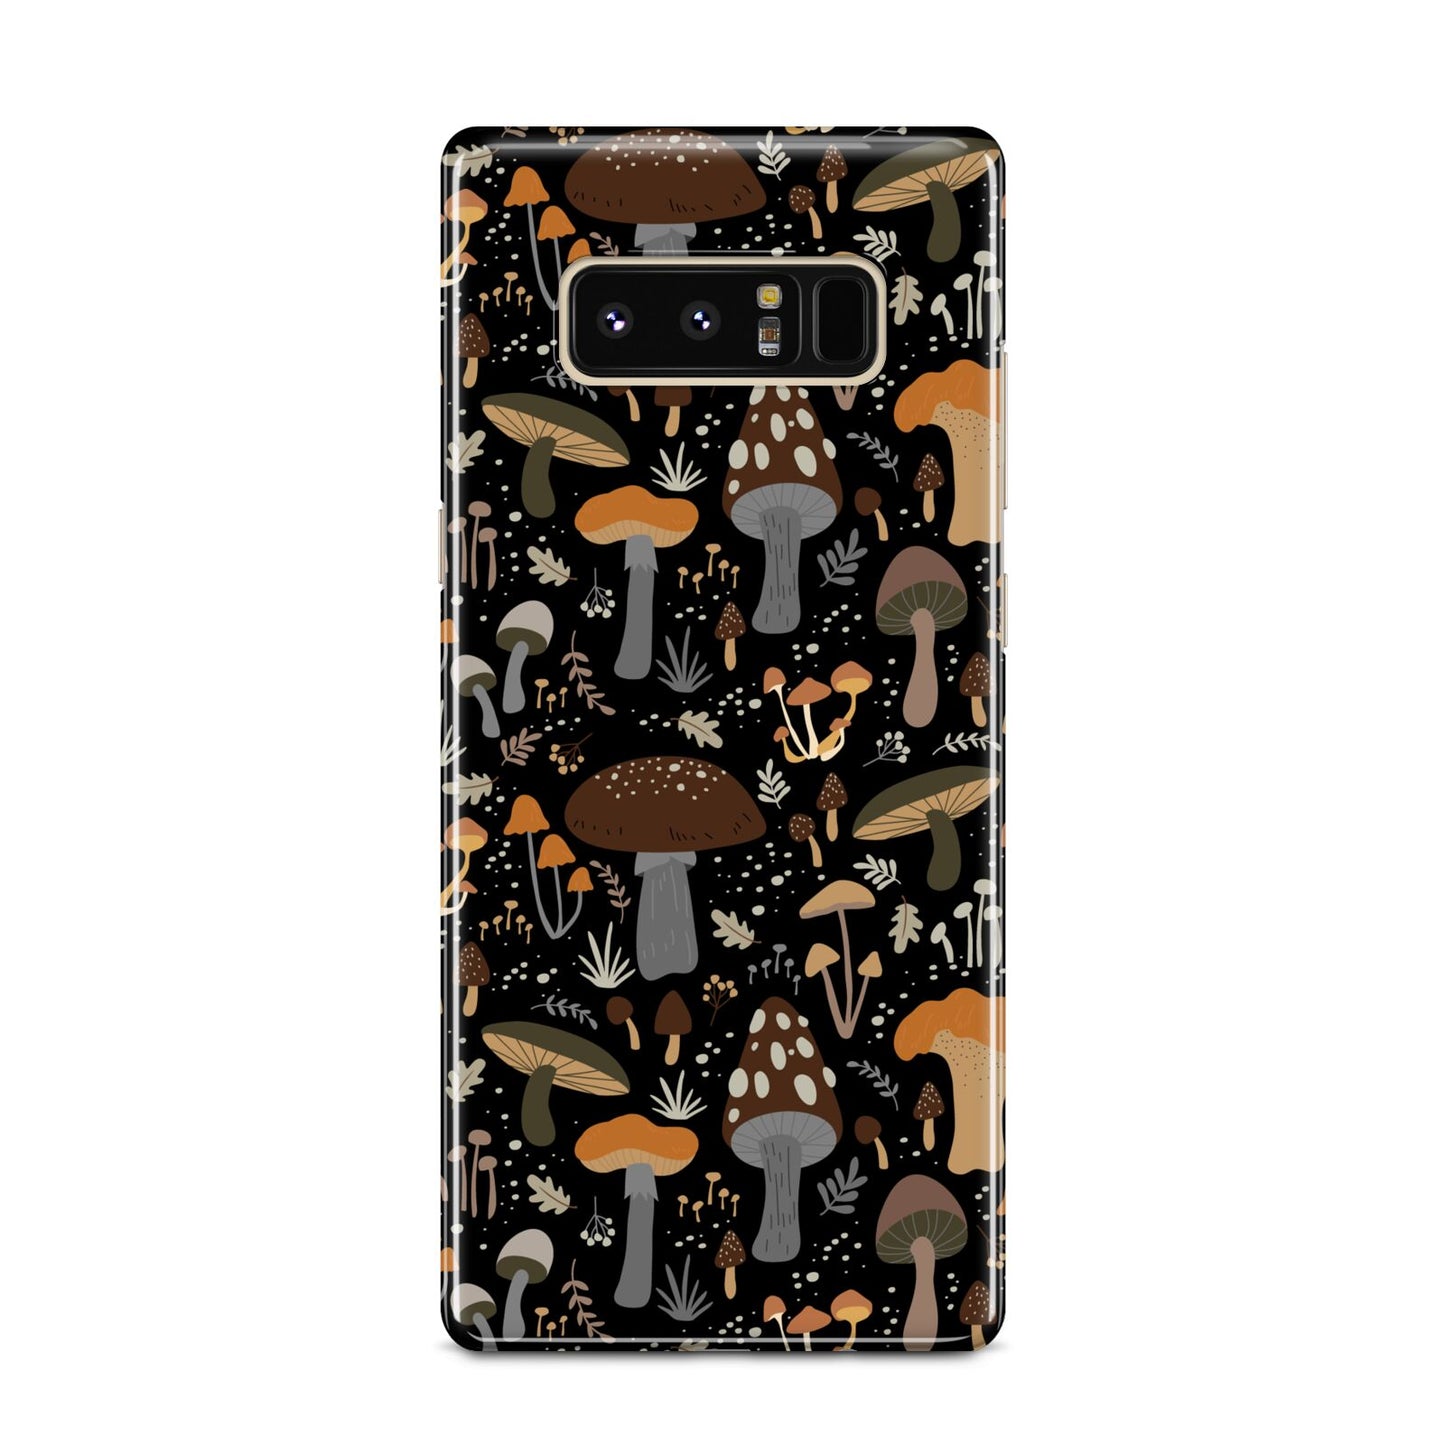 Mushroom Samsung Galaxy Note 8 Case